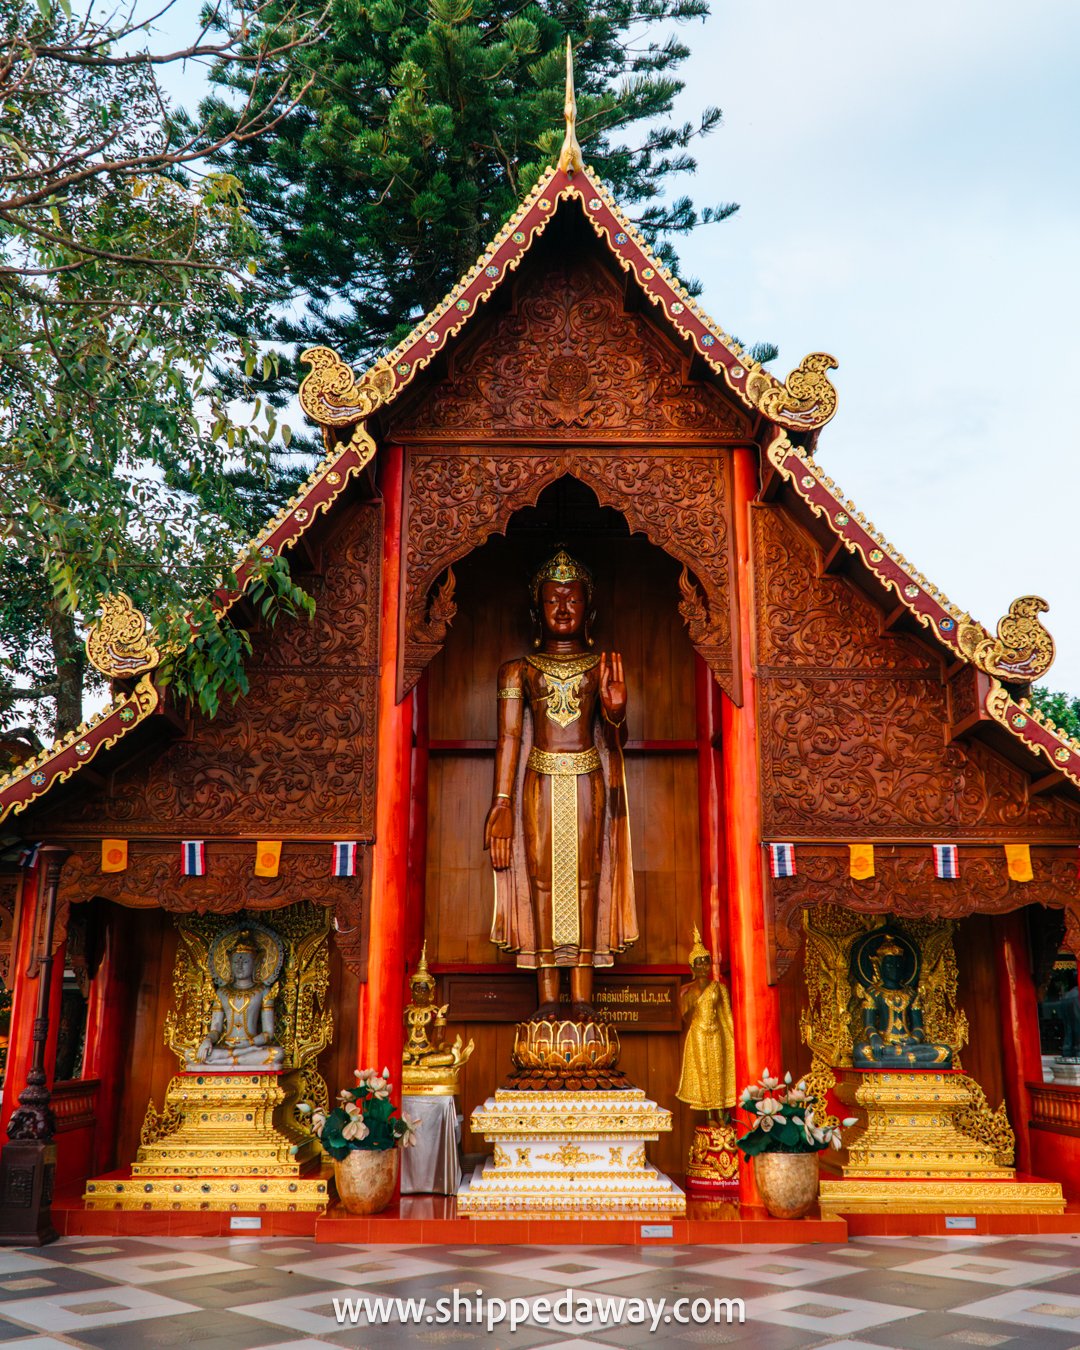 Beautiful architecture and details of Wat Phra That Doi Suthep - Doi Suthep Temple Chiang Mai, Thailand - Travel Guide to Doi Suthep Temple